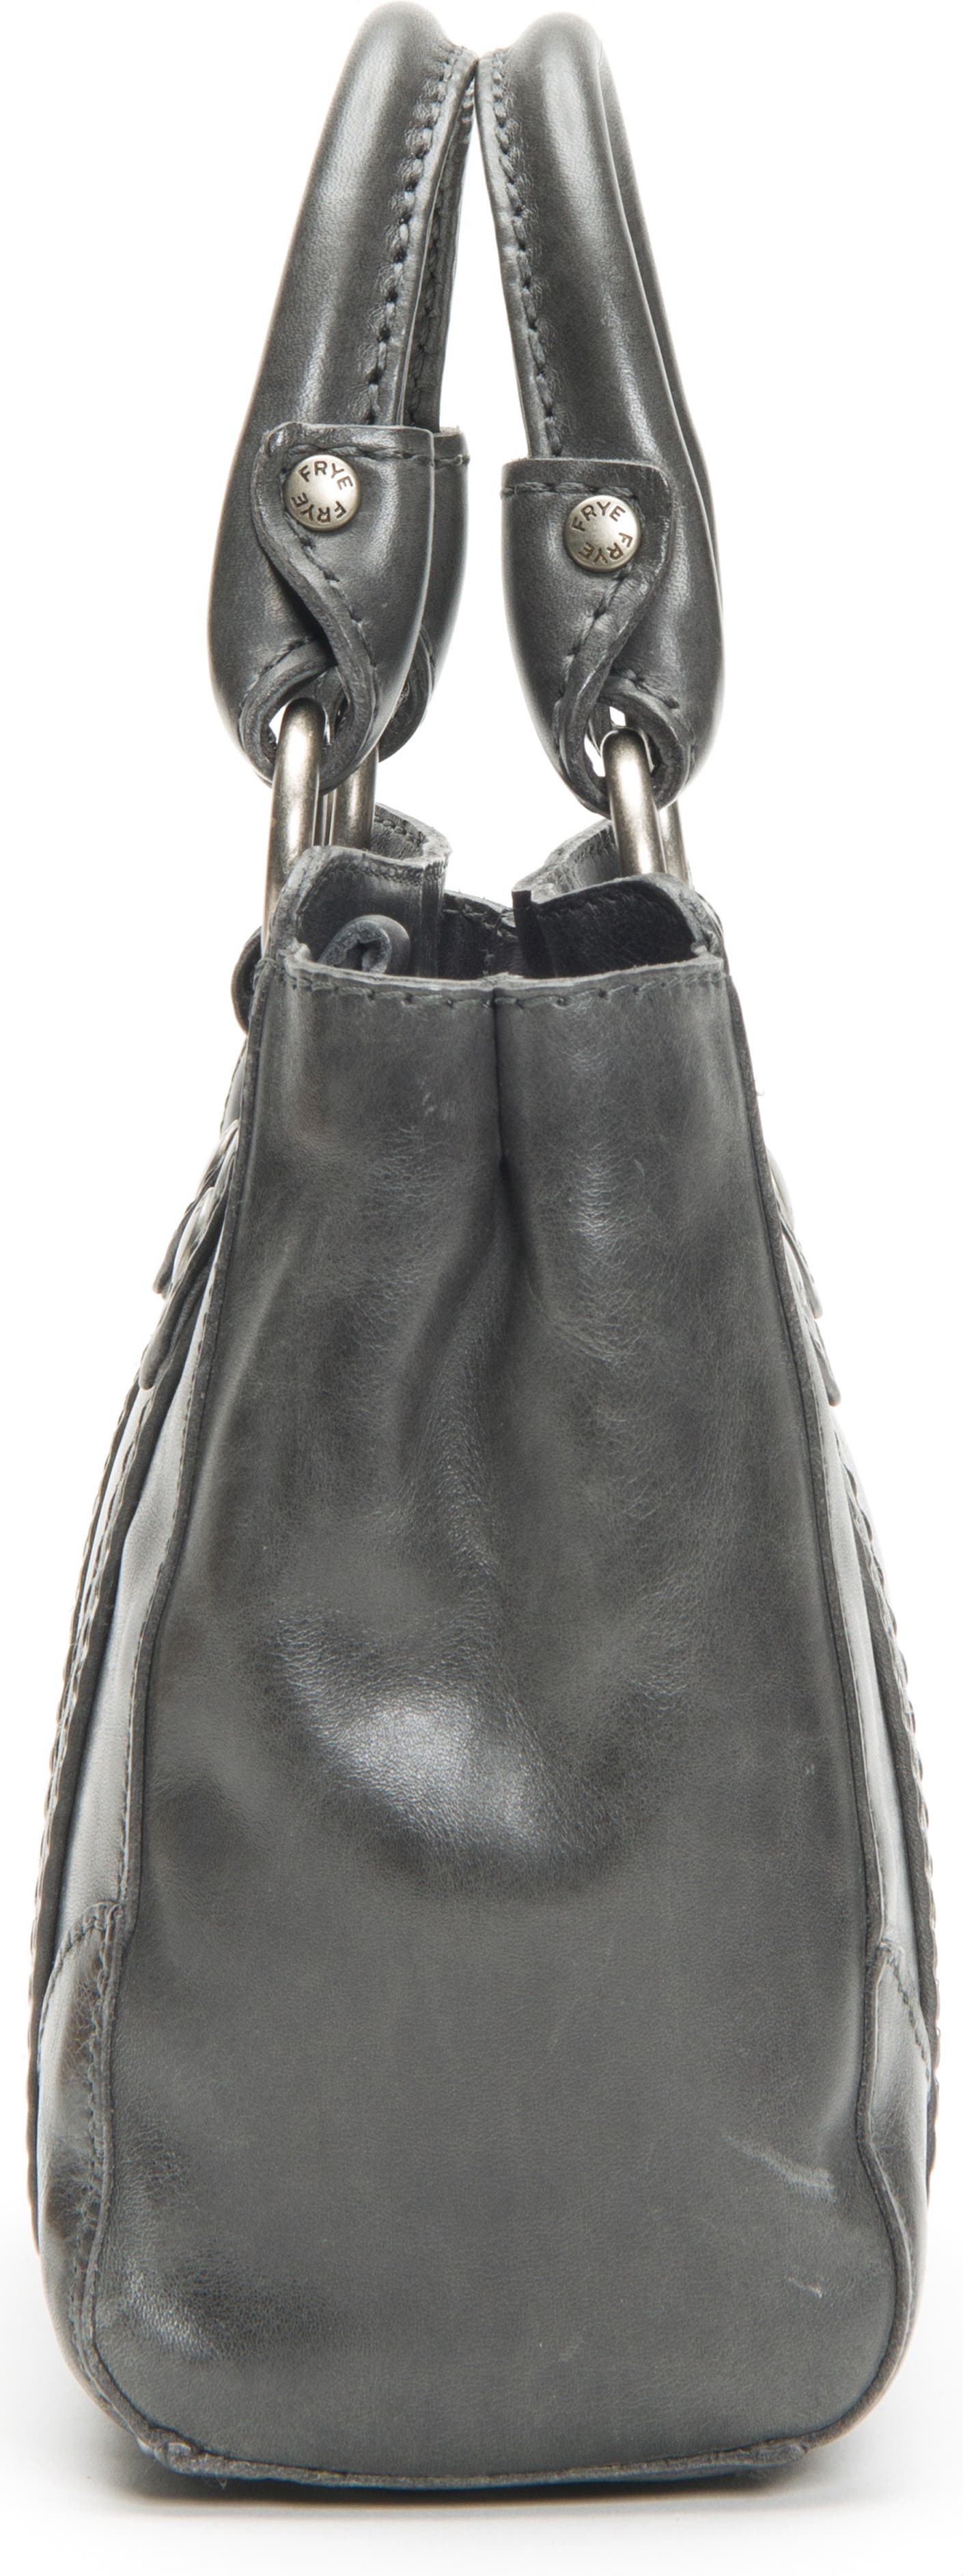 FRYE Melissa Small Tote Crossbody Leather Bag Slate One Size 34DB0083-SLT 